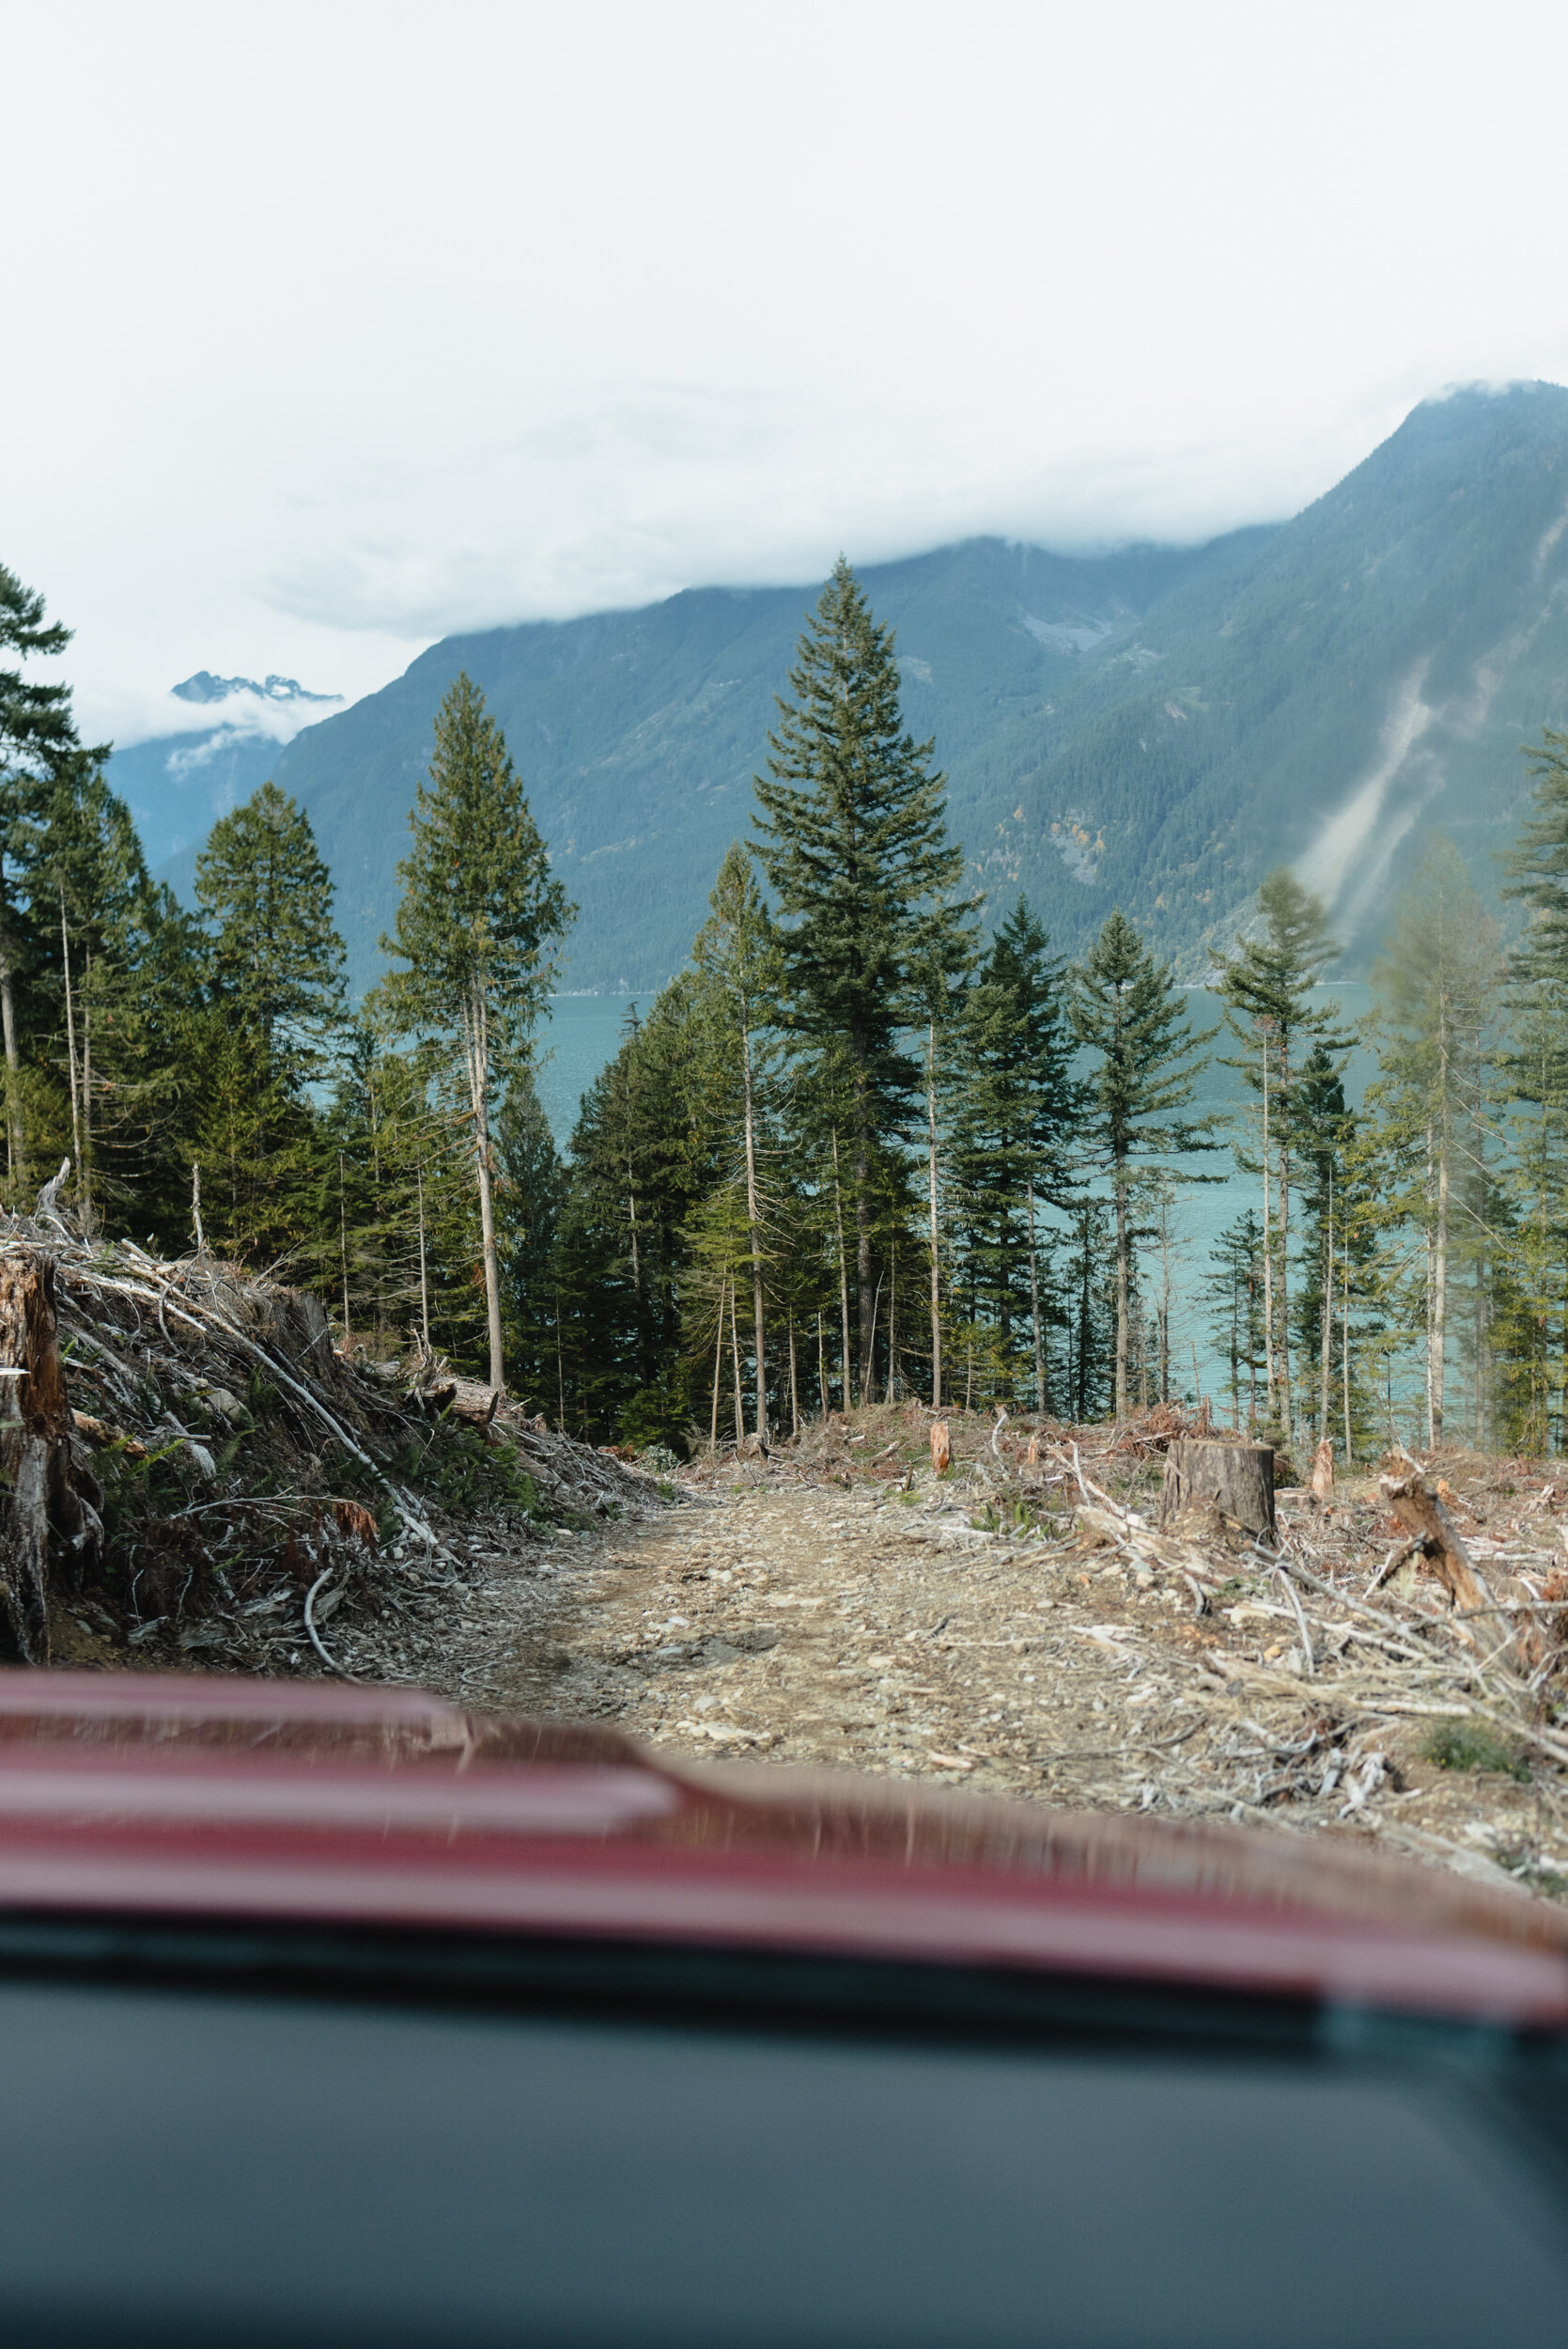 Driving down logging road